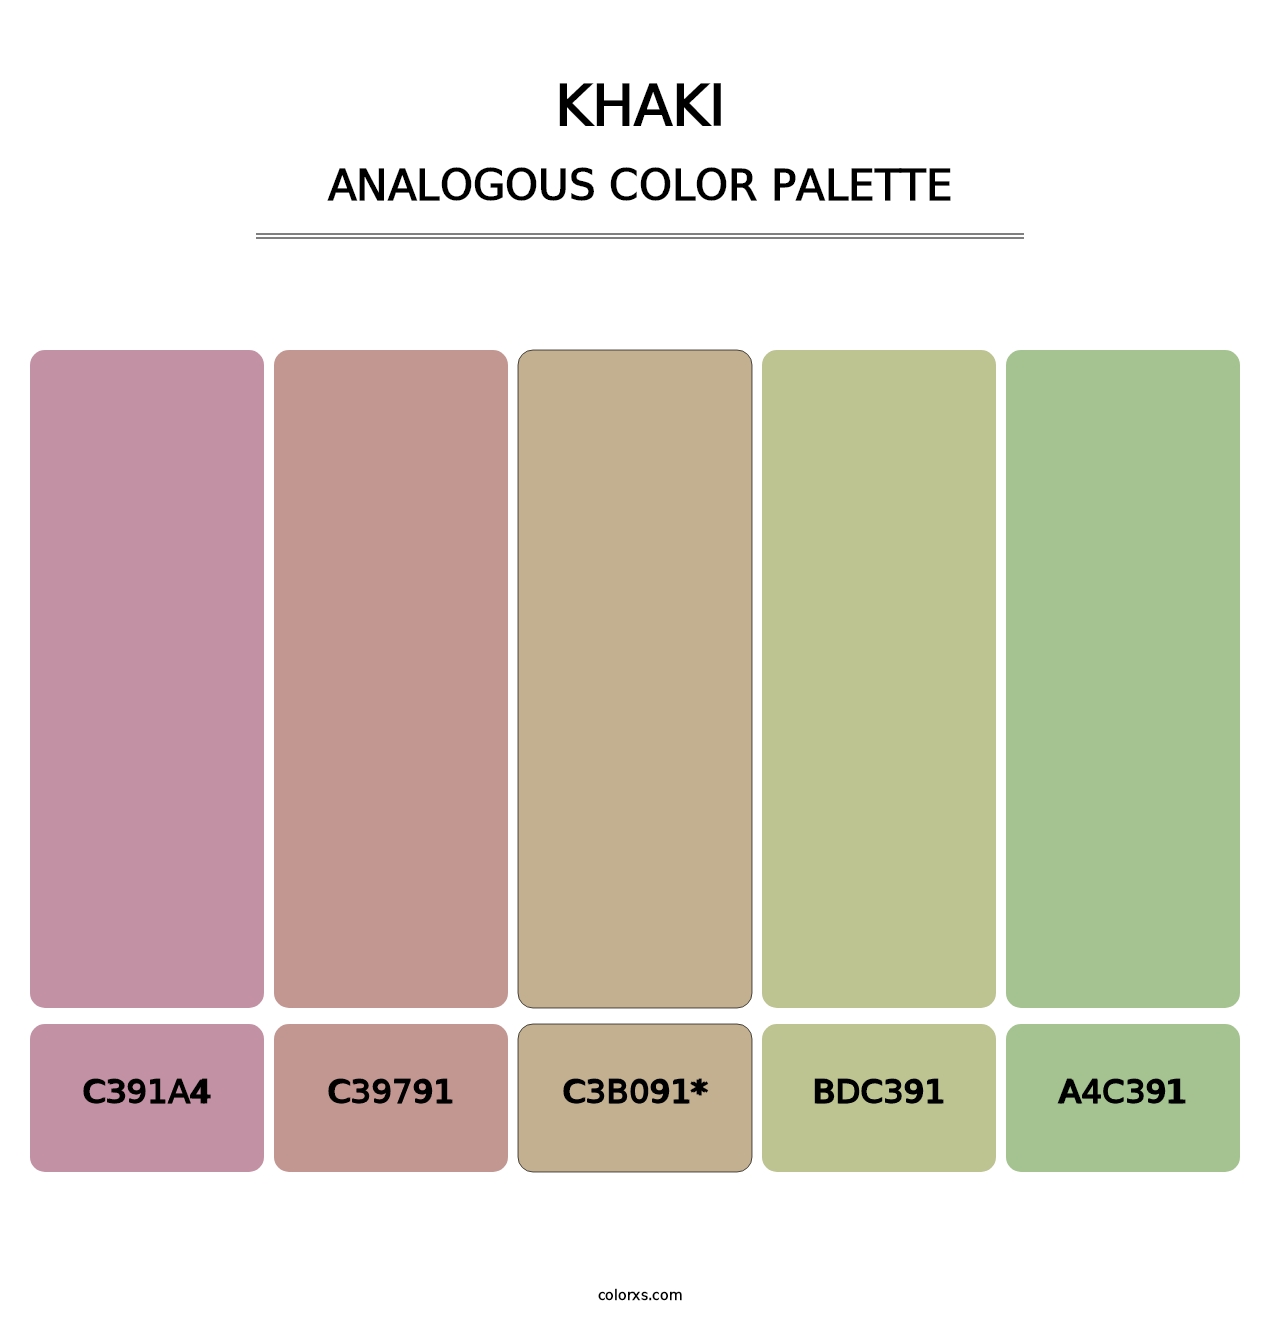 Khaki - Analogous Color Palette